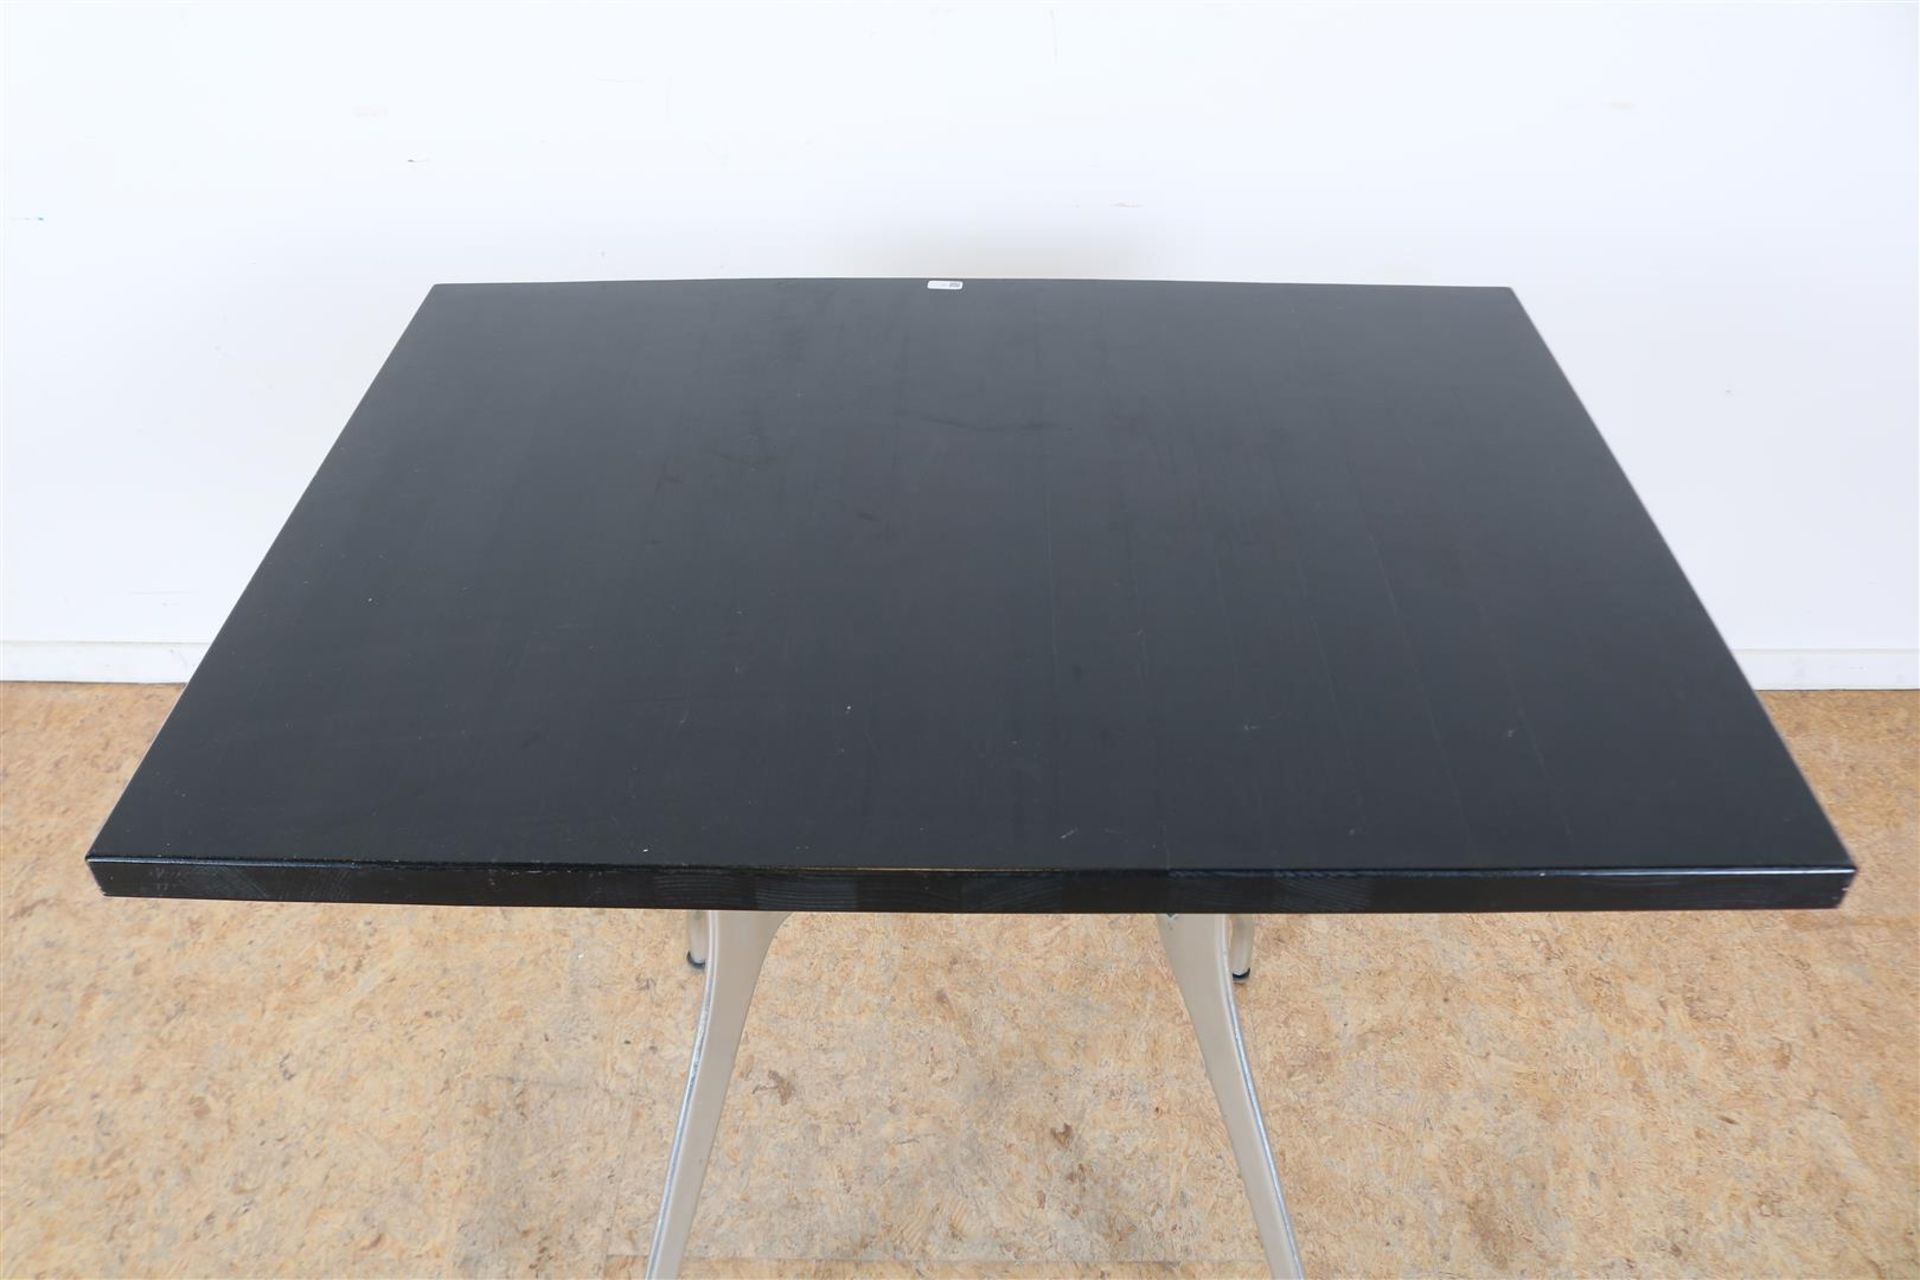 Satellite Breda bistro tables on aluminum base, h. 73, bro. 80, d. 60 cm. - Image 3 of 4